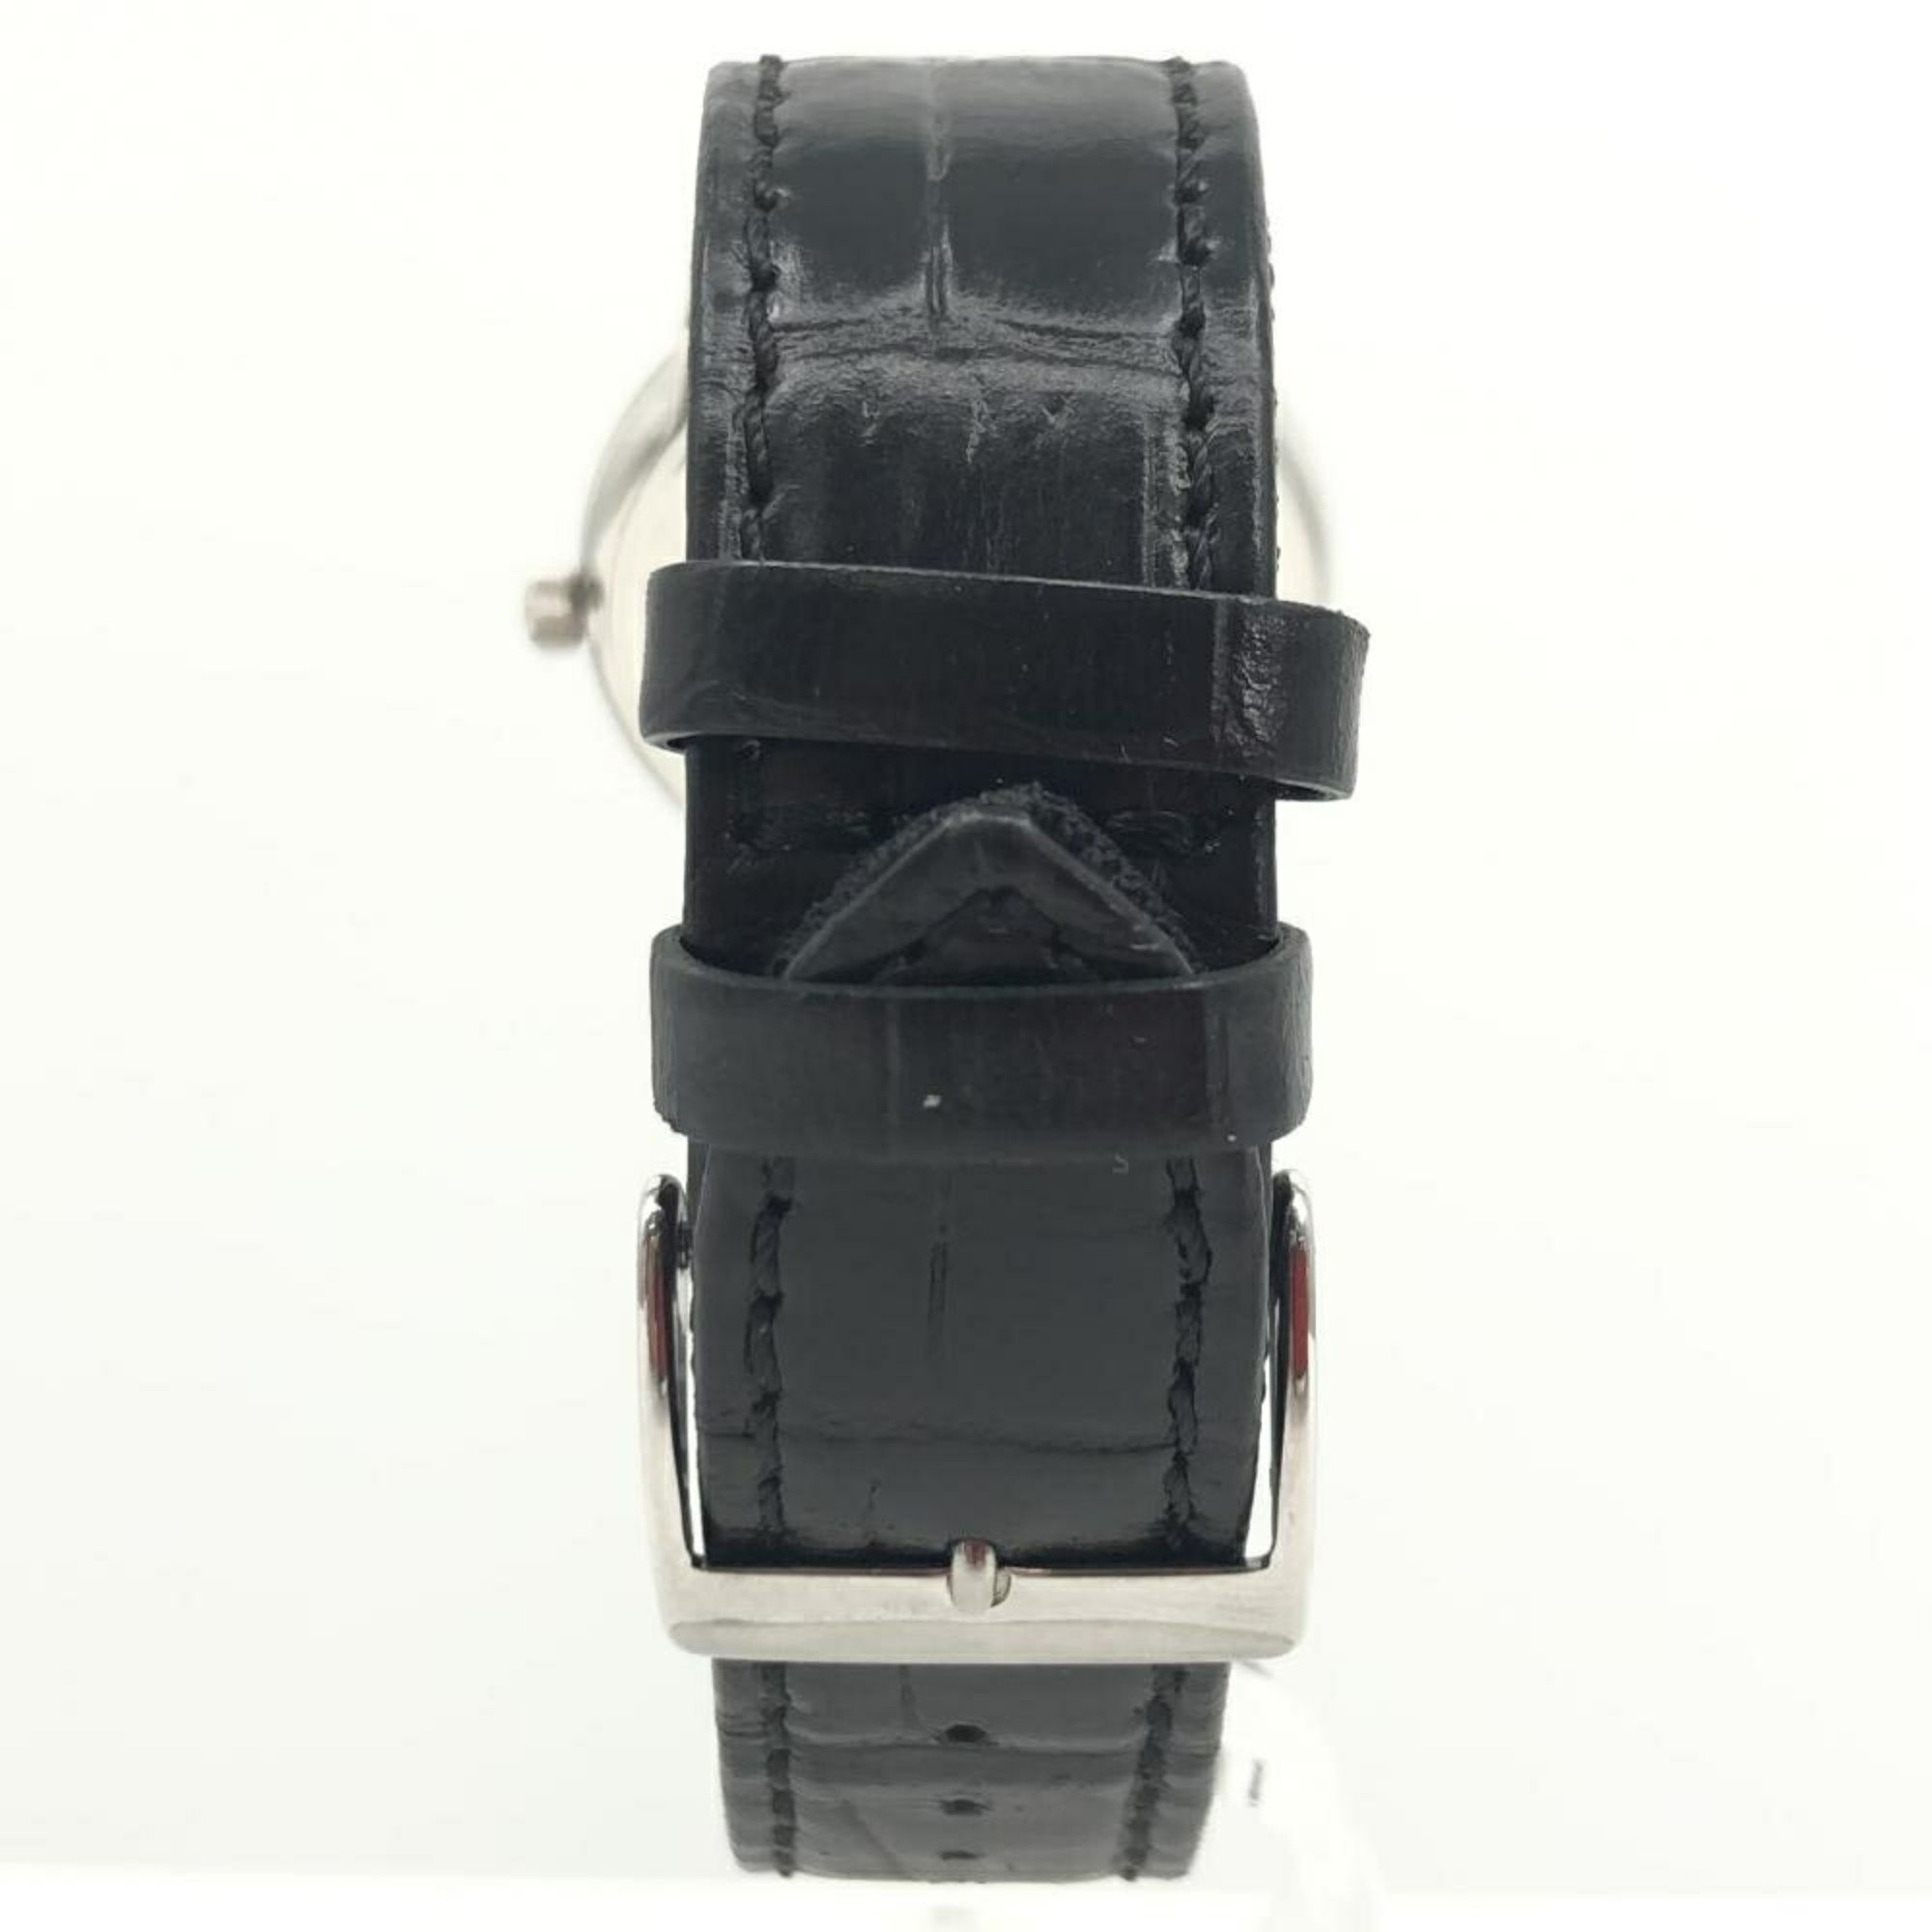 OMEGA 4800.51 Deville Prestige Date Wristwatch Automatic Black